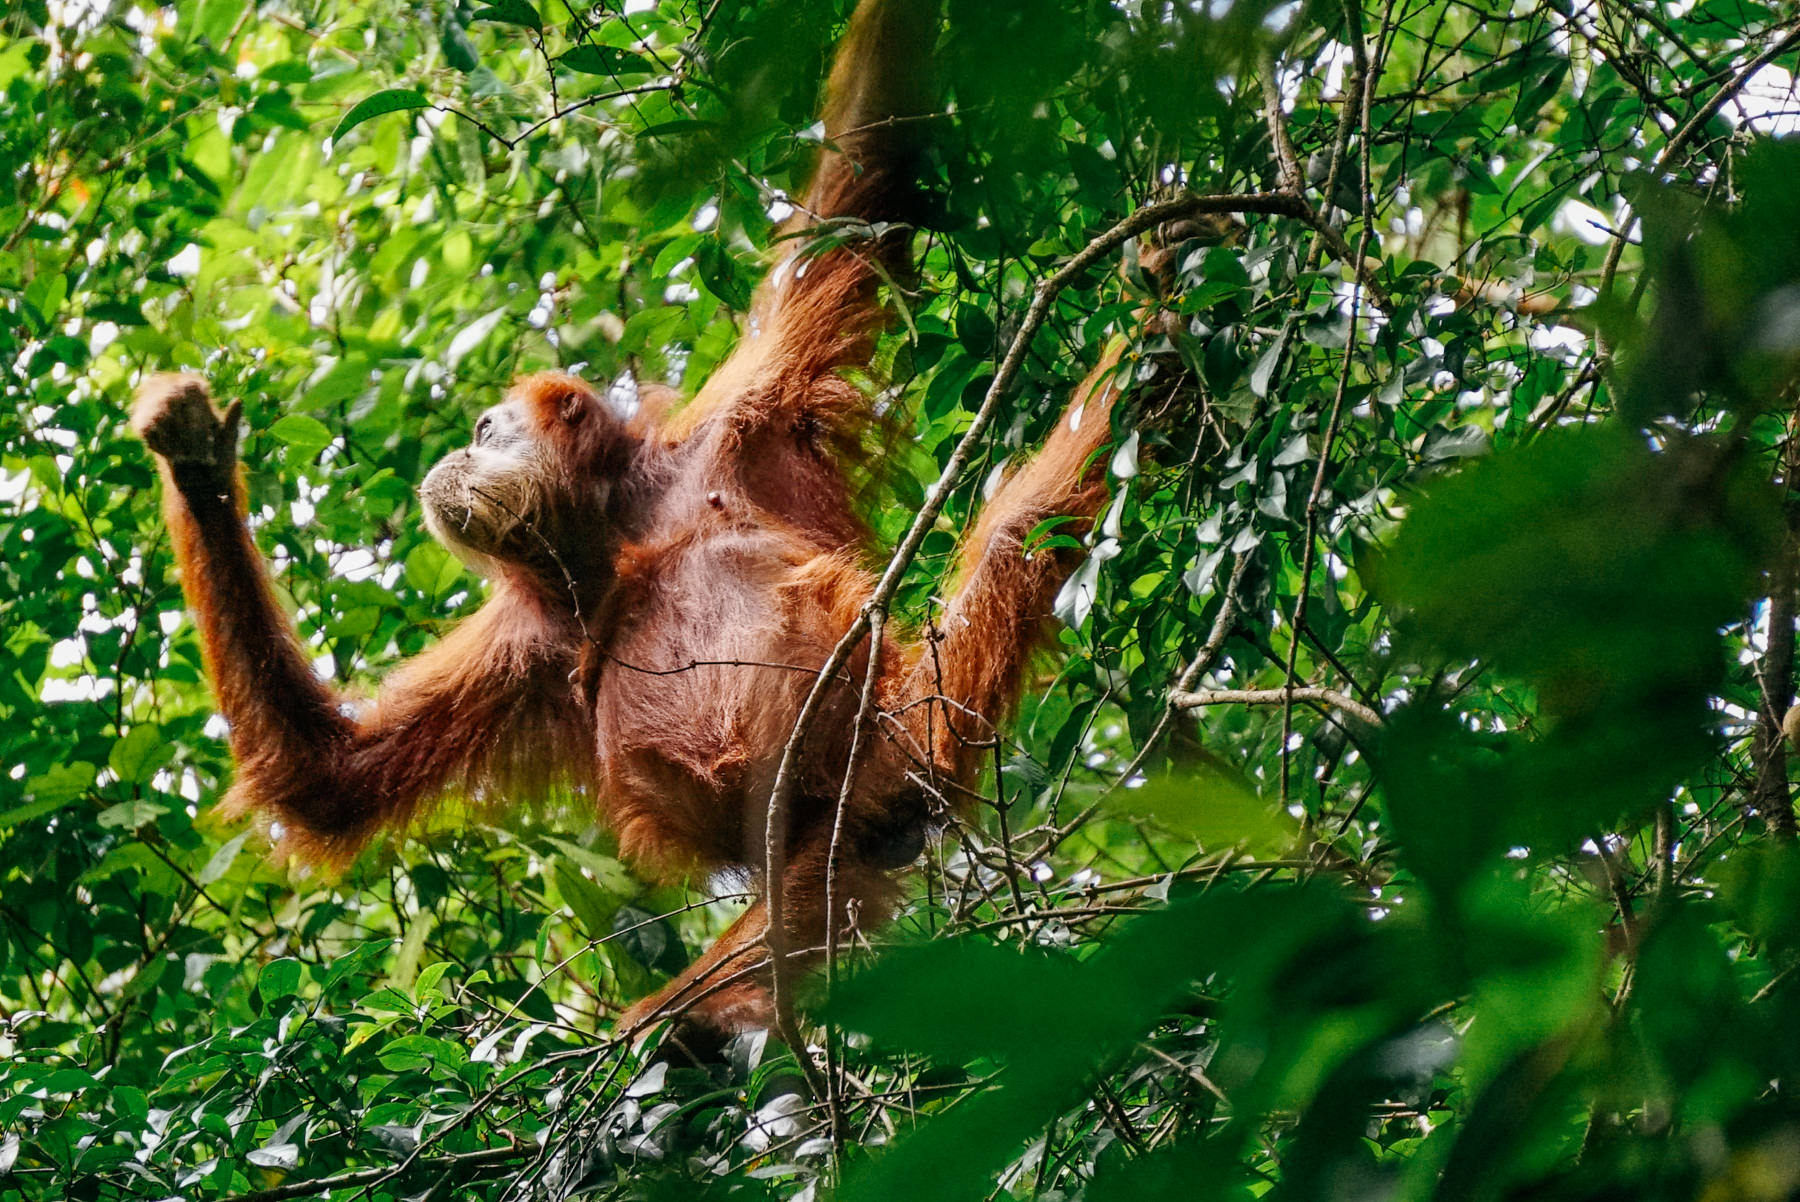 Sumatran orangutan swinging through the trees